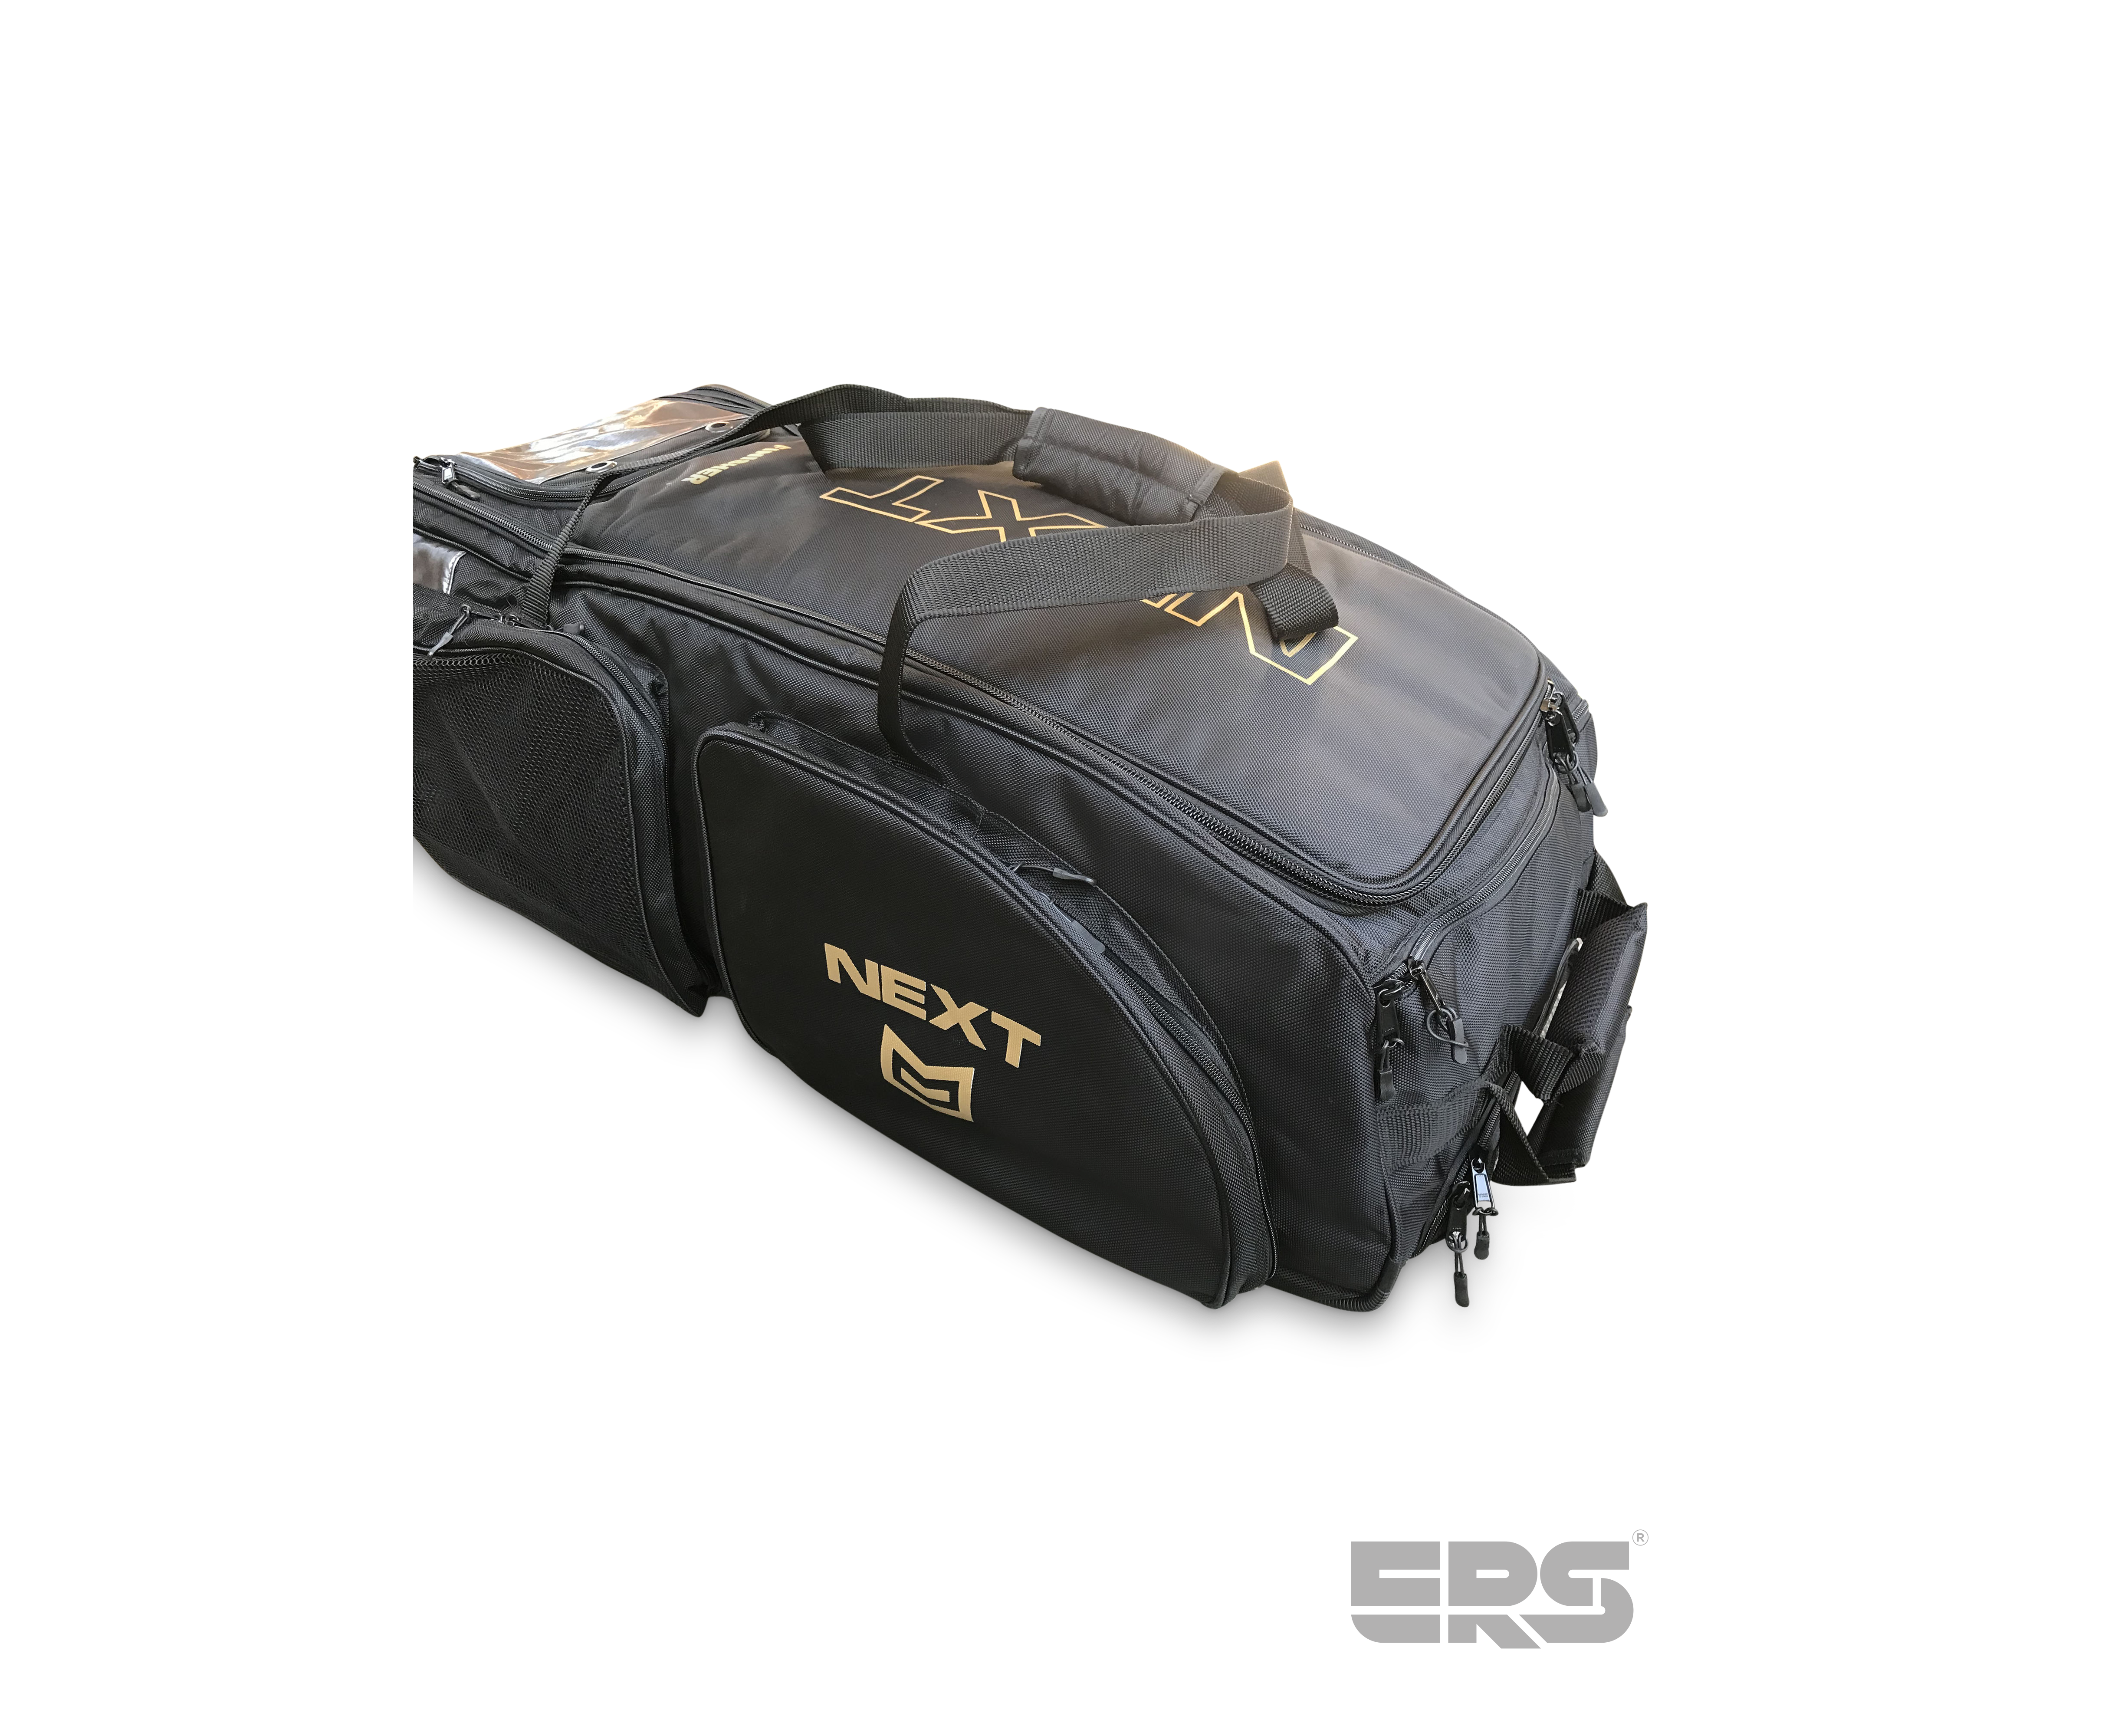 ERS Resilient wheelie kit bag – Eagle Rise Sports